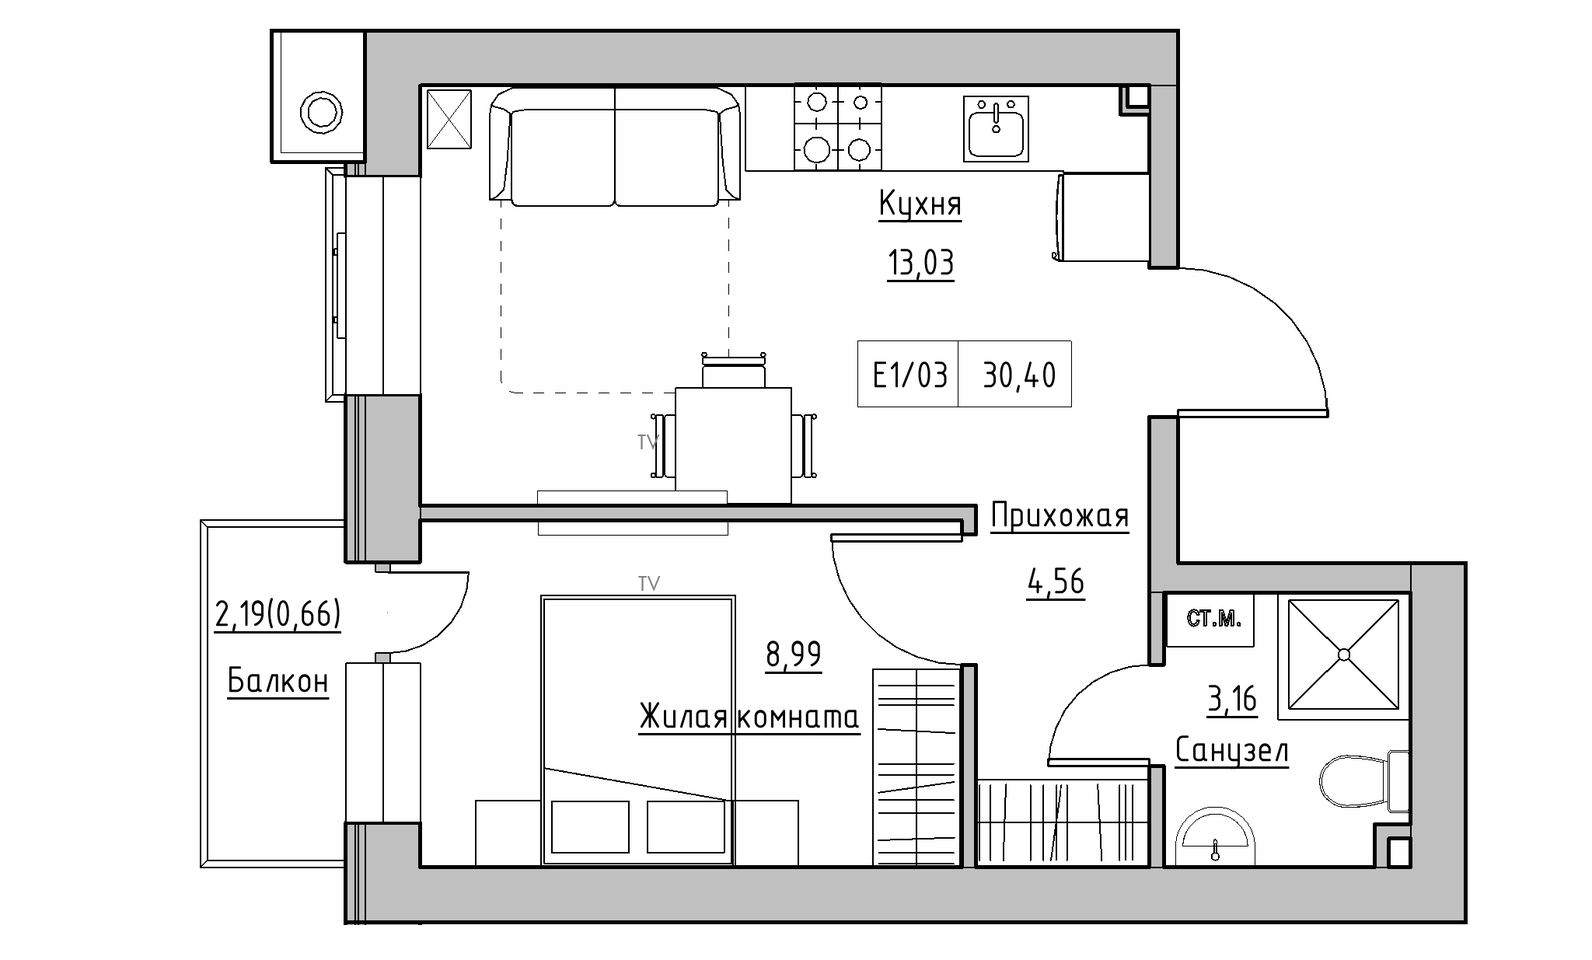 Planning 1-rm flats area 30.4m2, KS-014-03/0012.